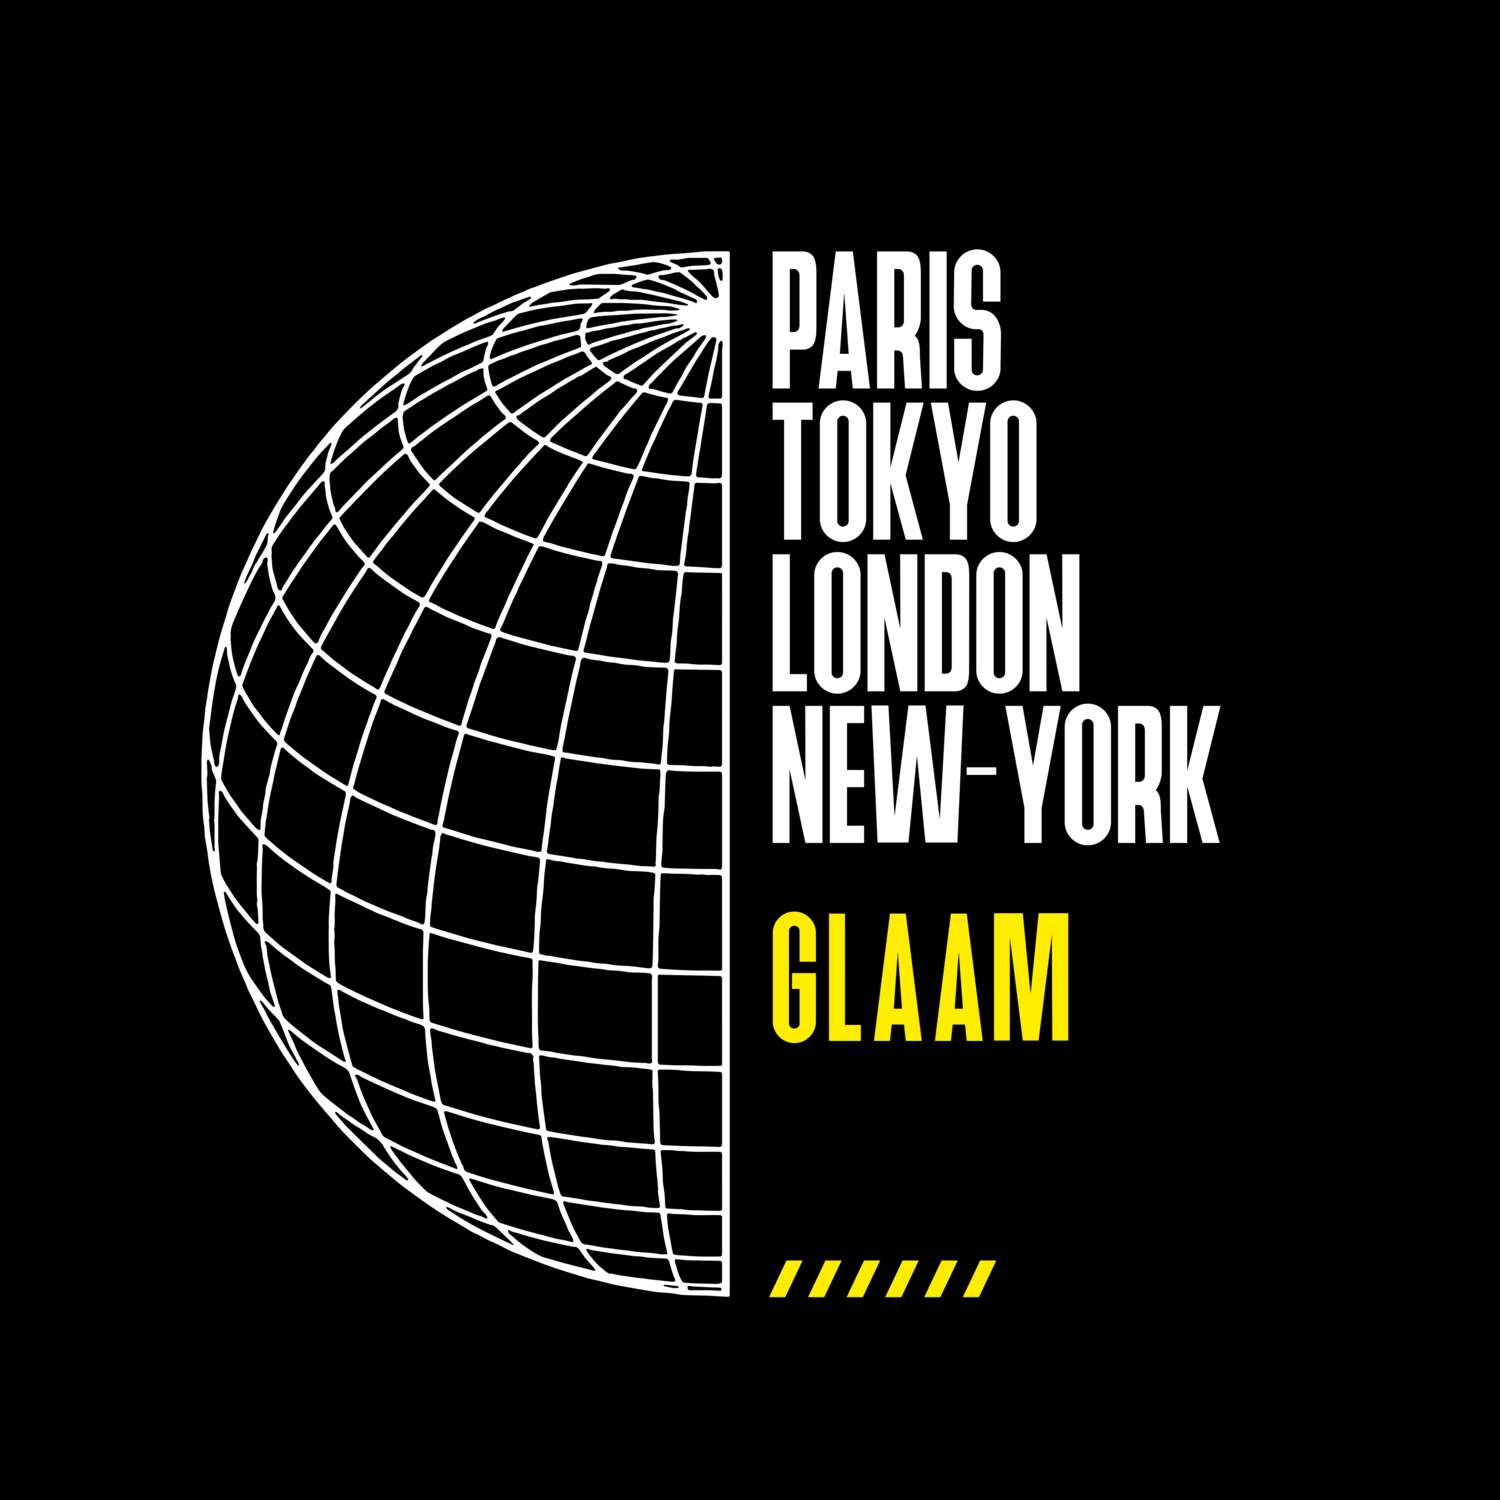 Glaam T-Shirt »Paris Tokyo London«